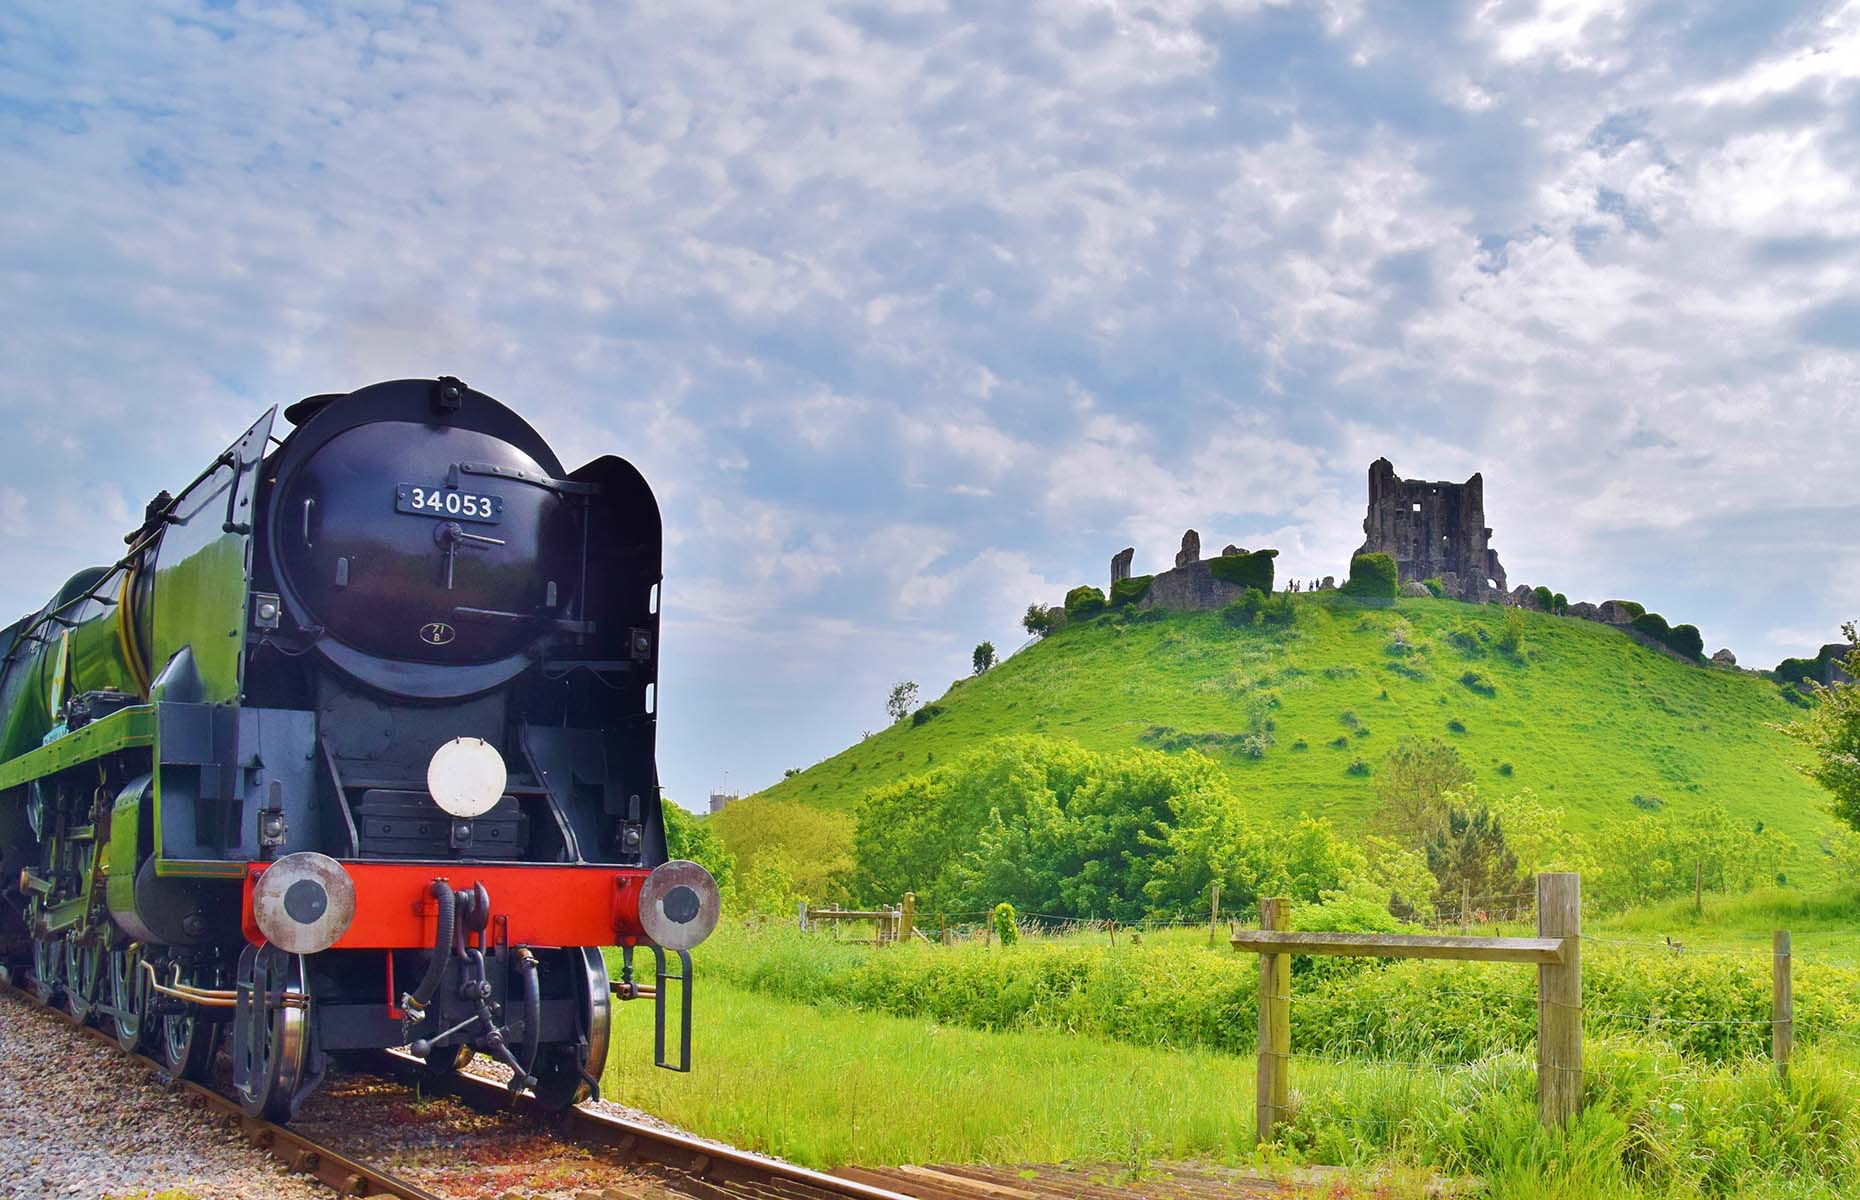 Swanage Railway (Image: Chrispy4/Shutterstock)